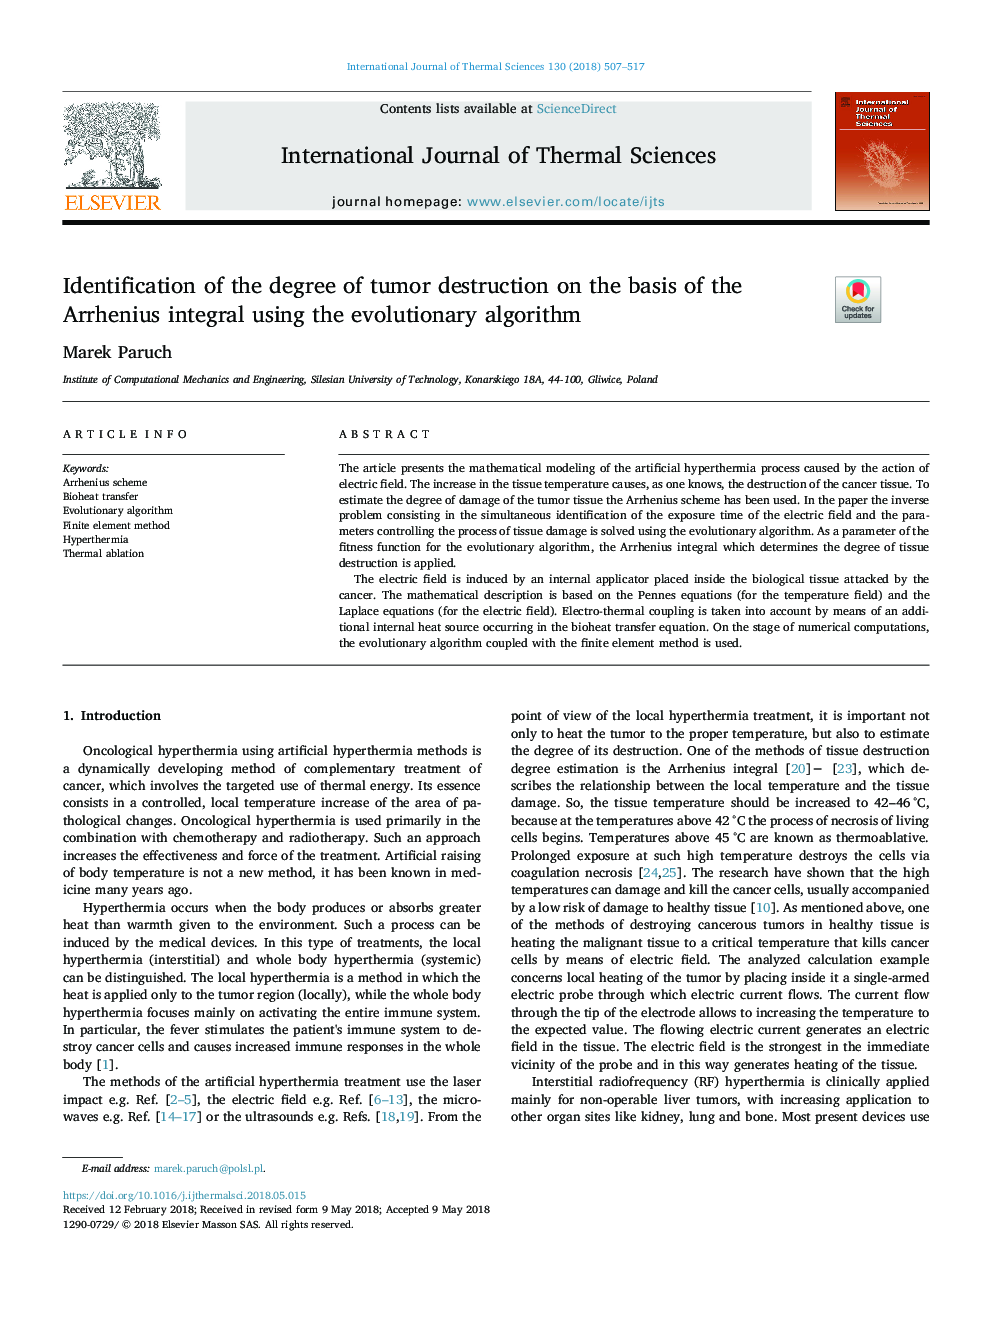 Identification of the degree of tumor destruction on the basis of the Arrhenius integral using the evolutionary algorithm